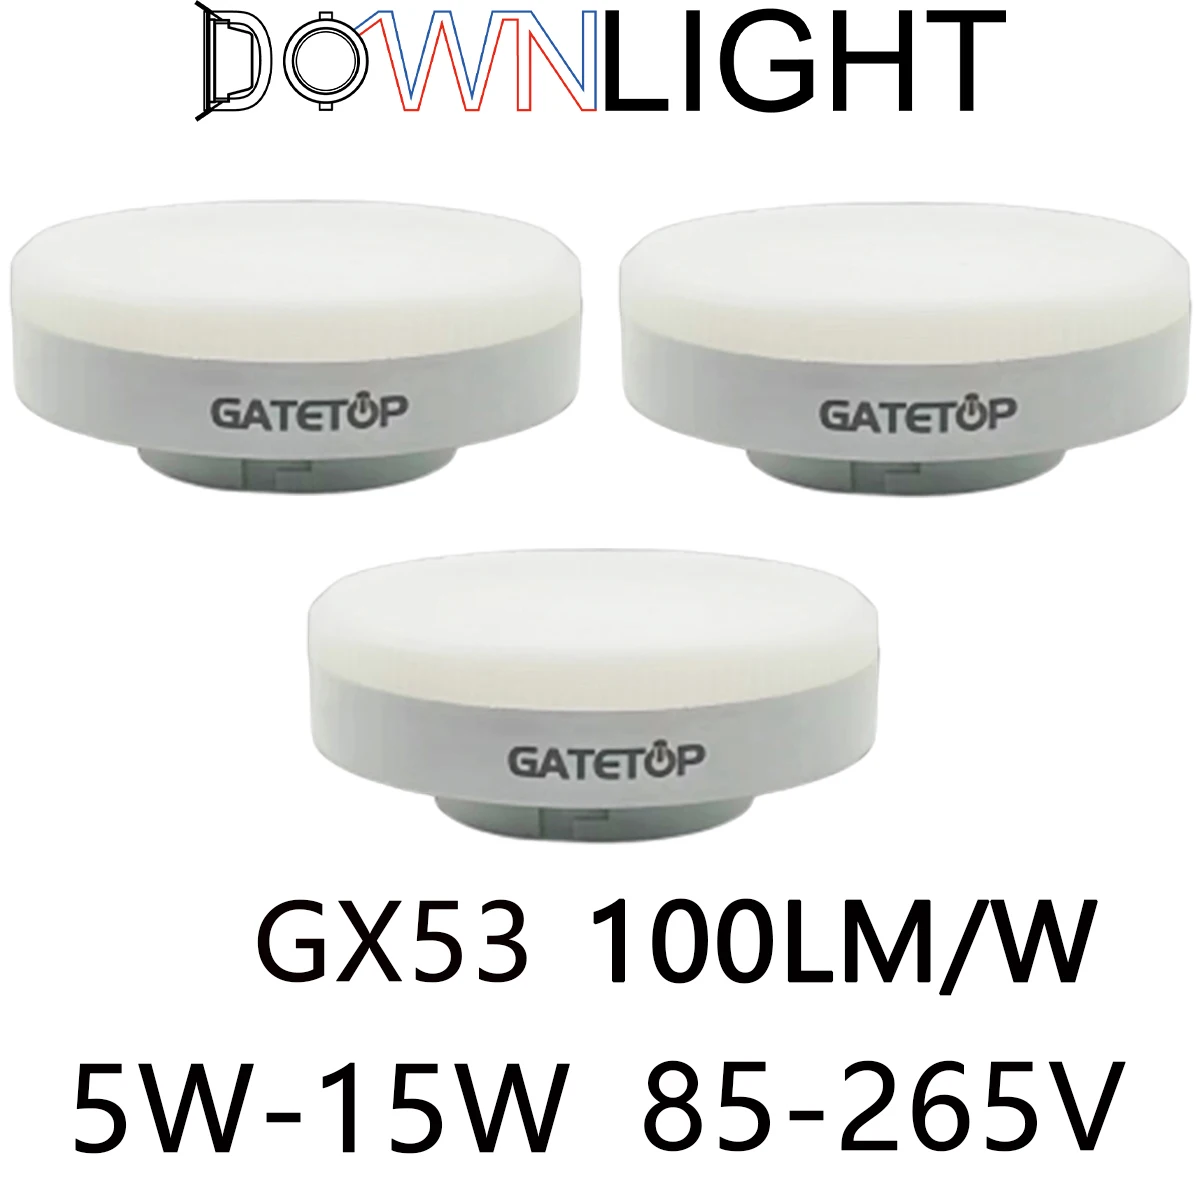 4-20PCS LED cabinet light wardrobe light GX53 spotlight AC85V-260V no flickering warm white light 5W-15W high lumens 100LM/W